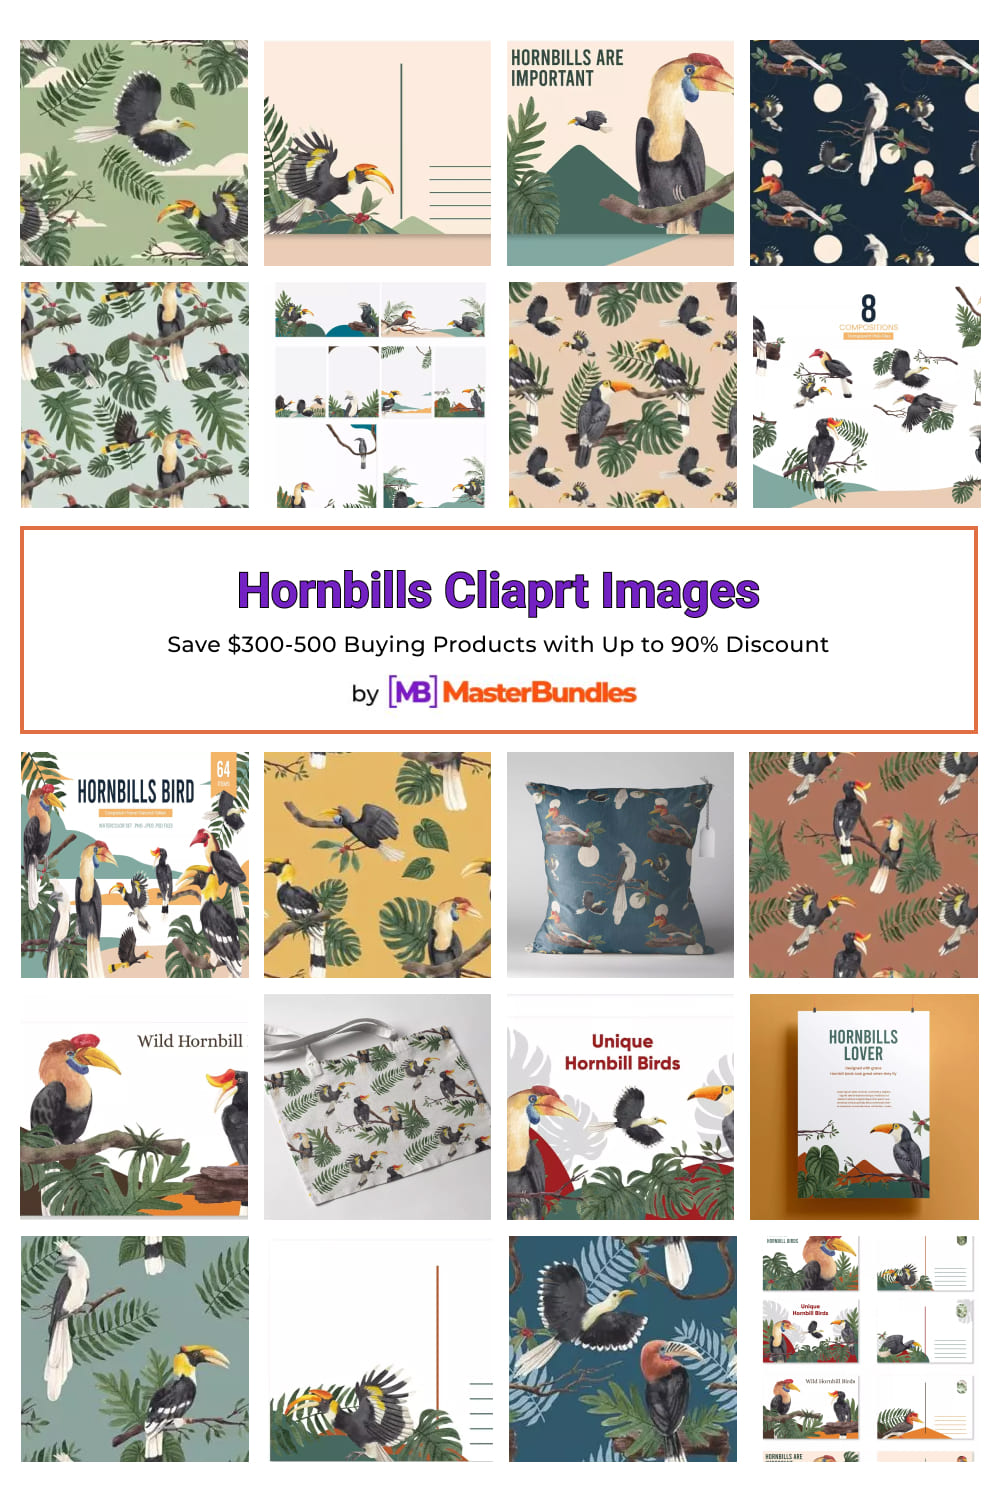 Hornbills Cliaprt Images Pinterest.